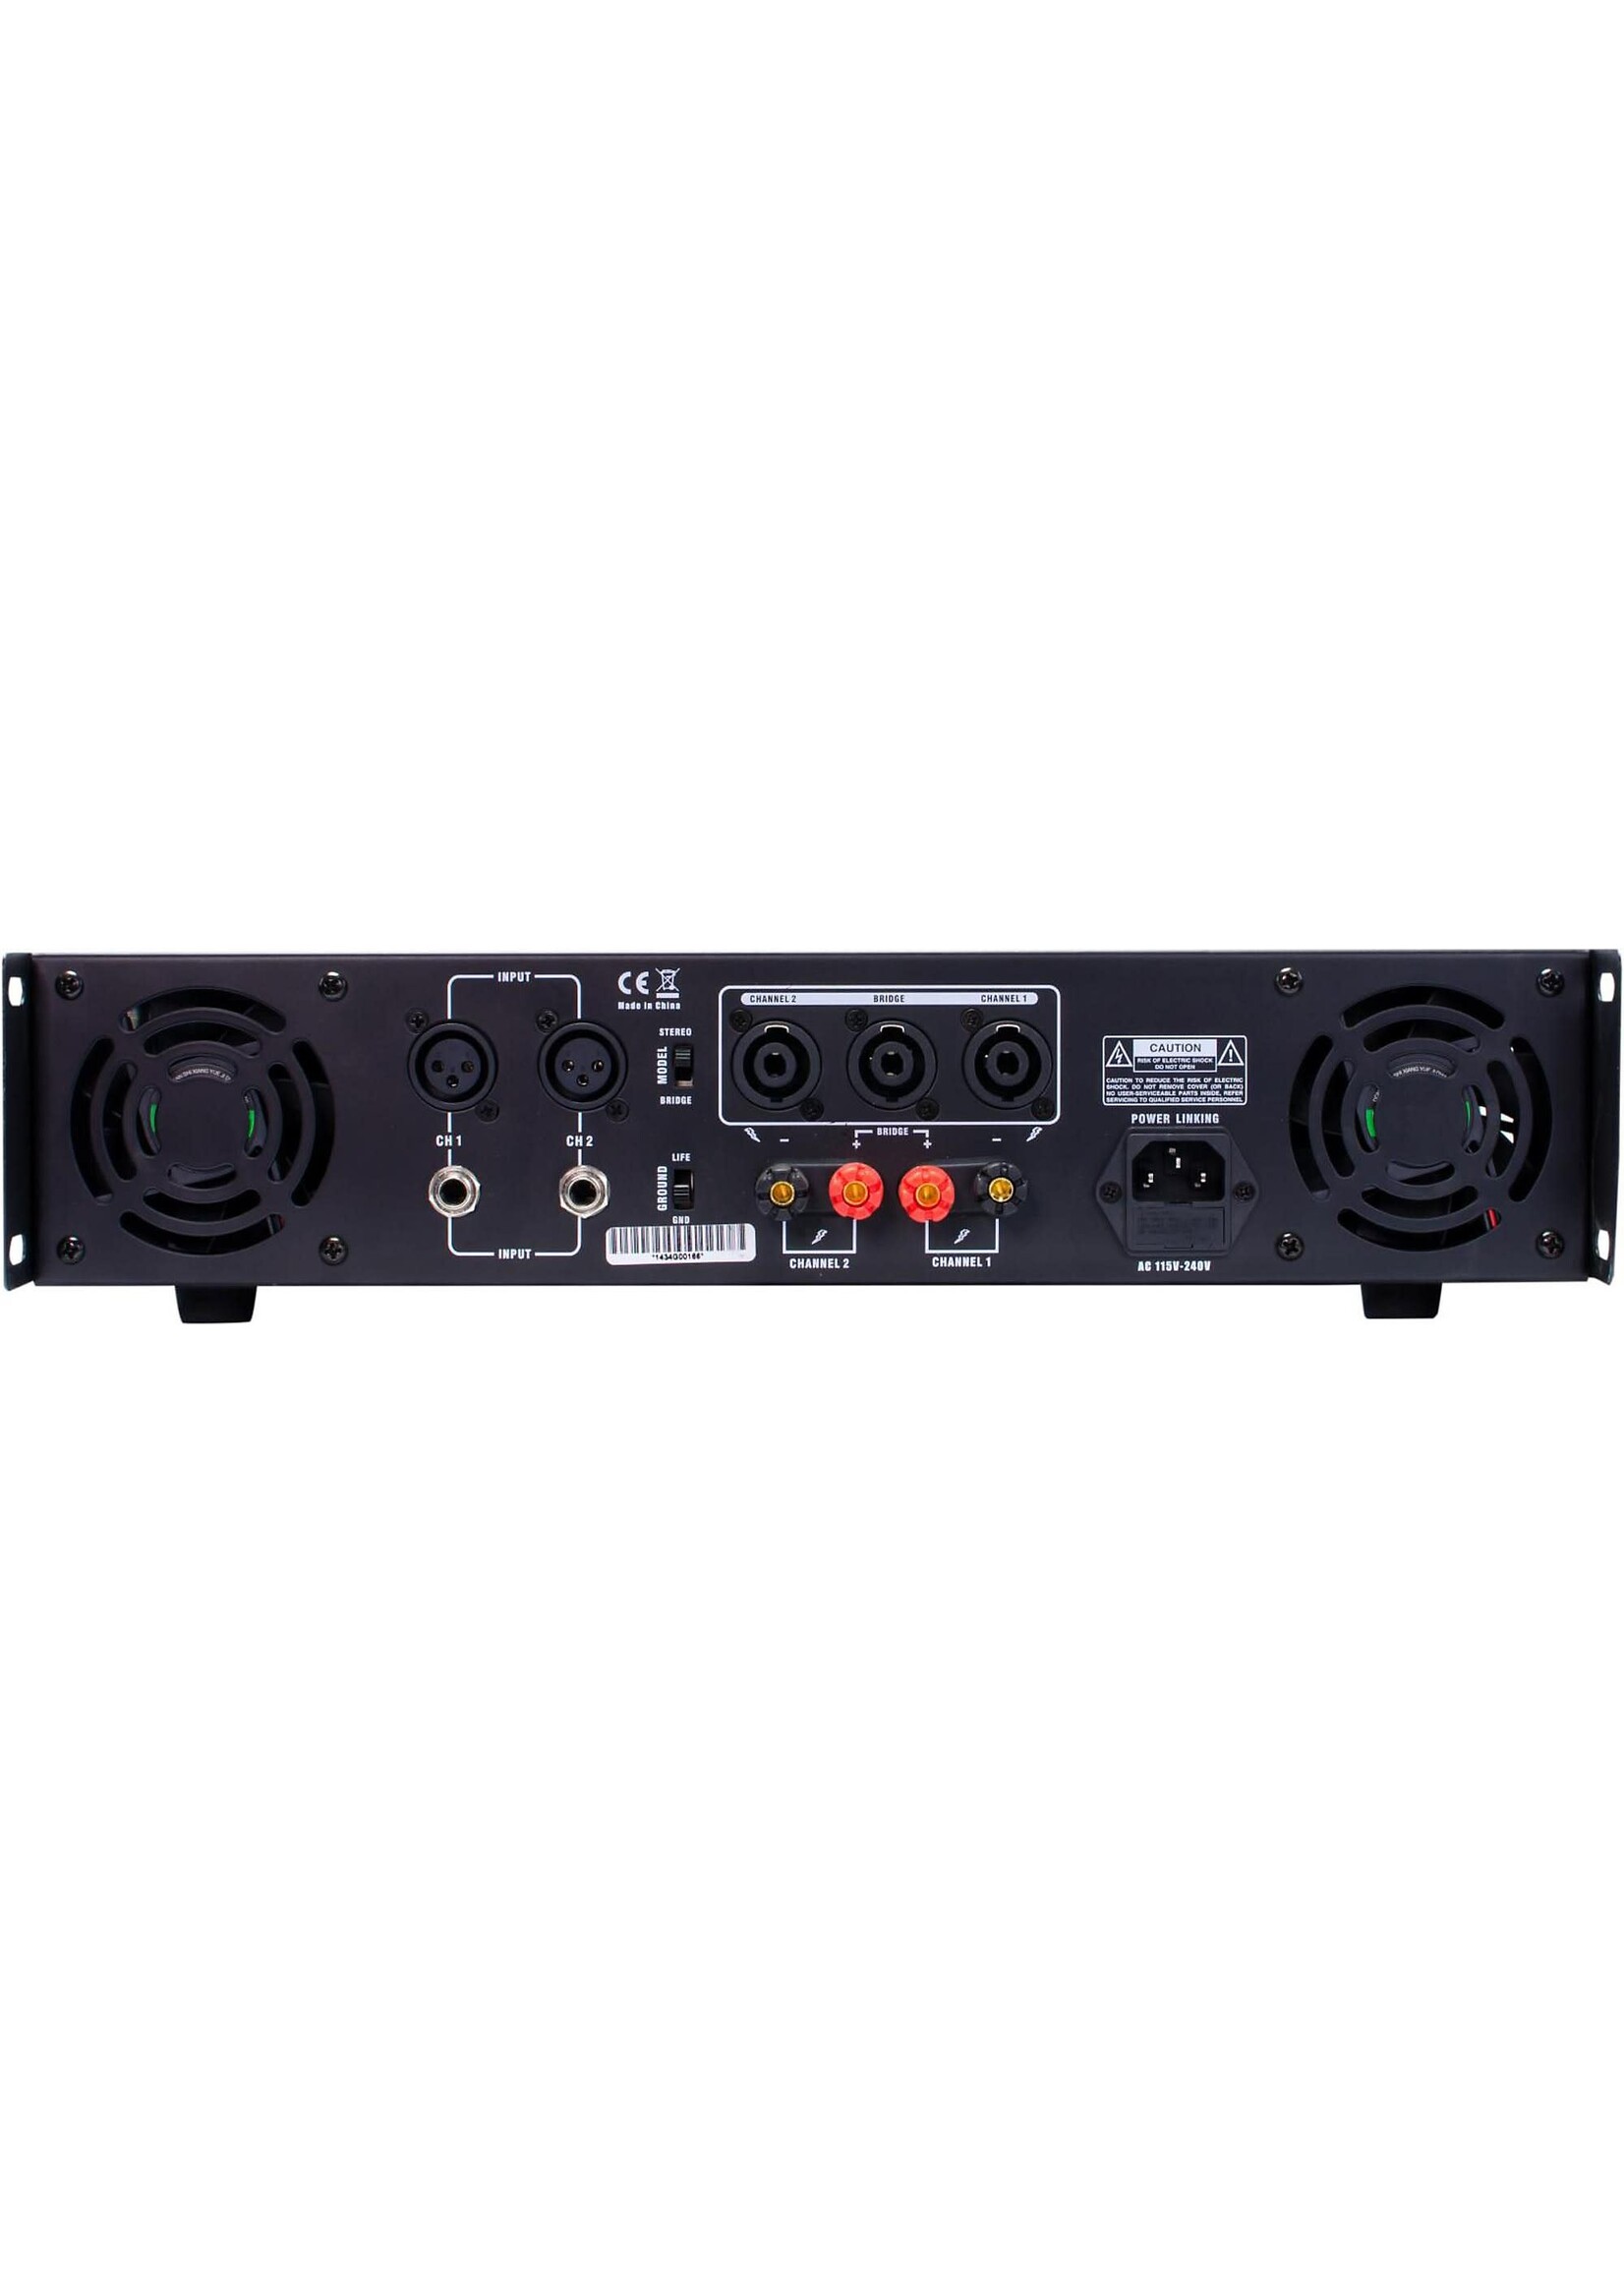 Gemini 5000W Professional Power Amplifier Item ID: XGA-5000